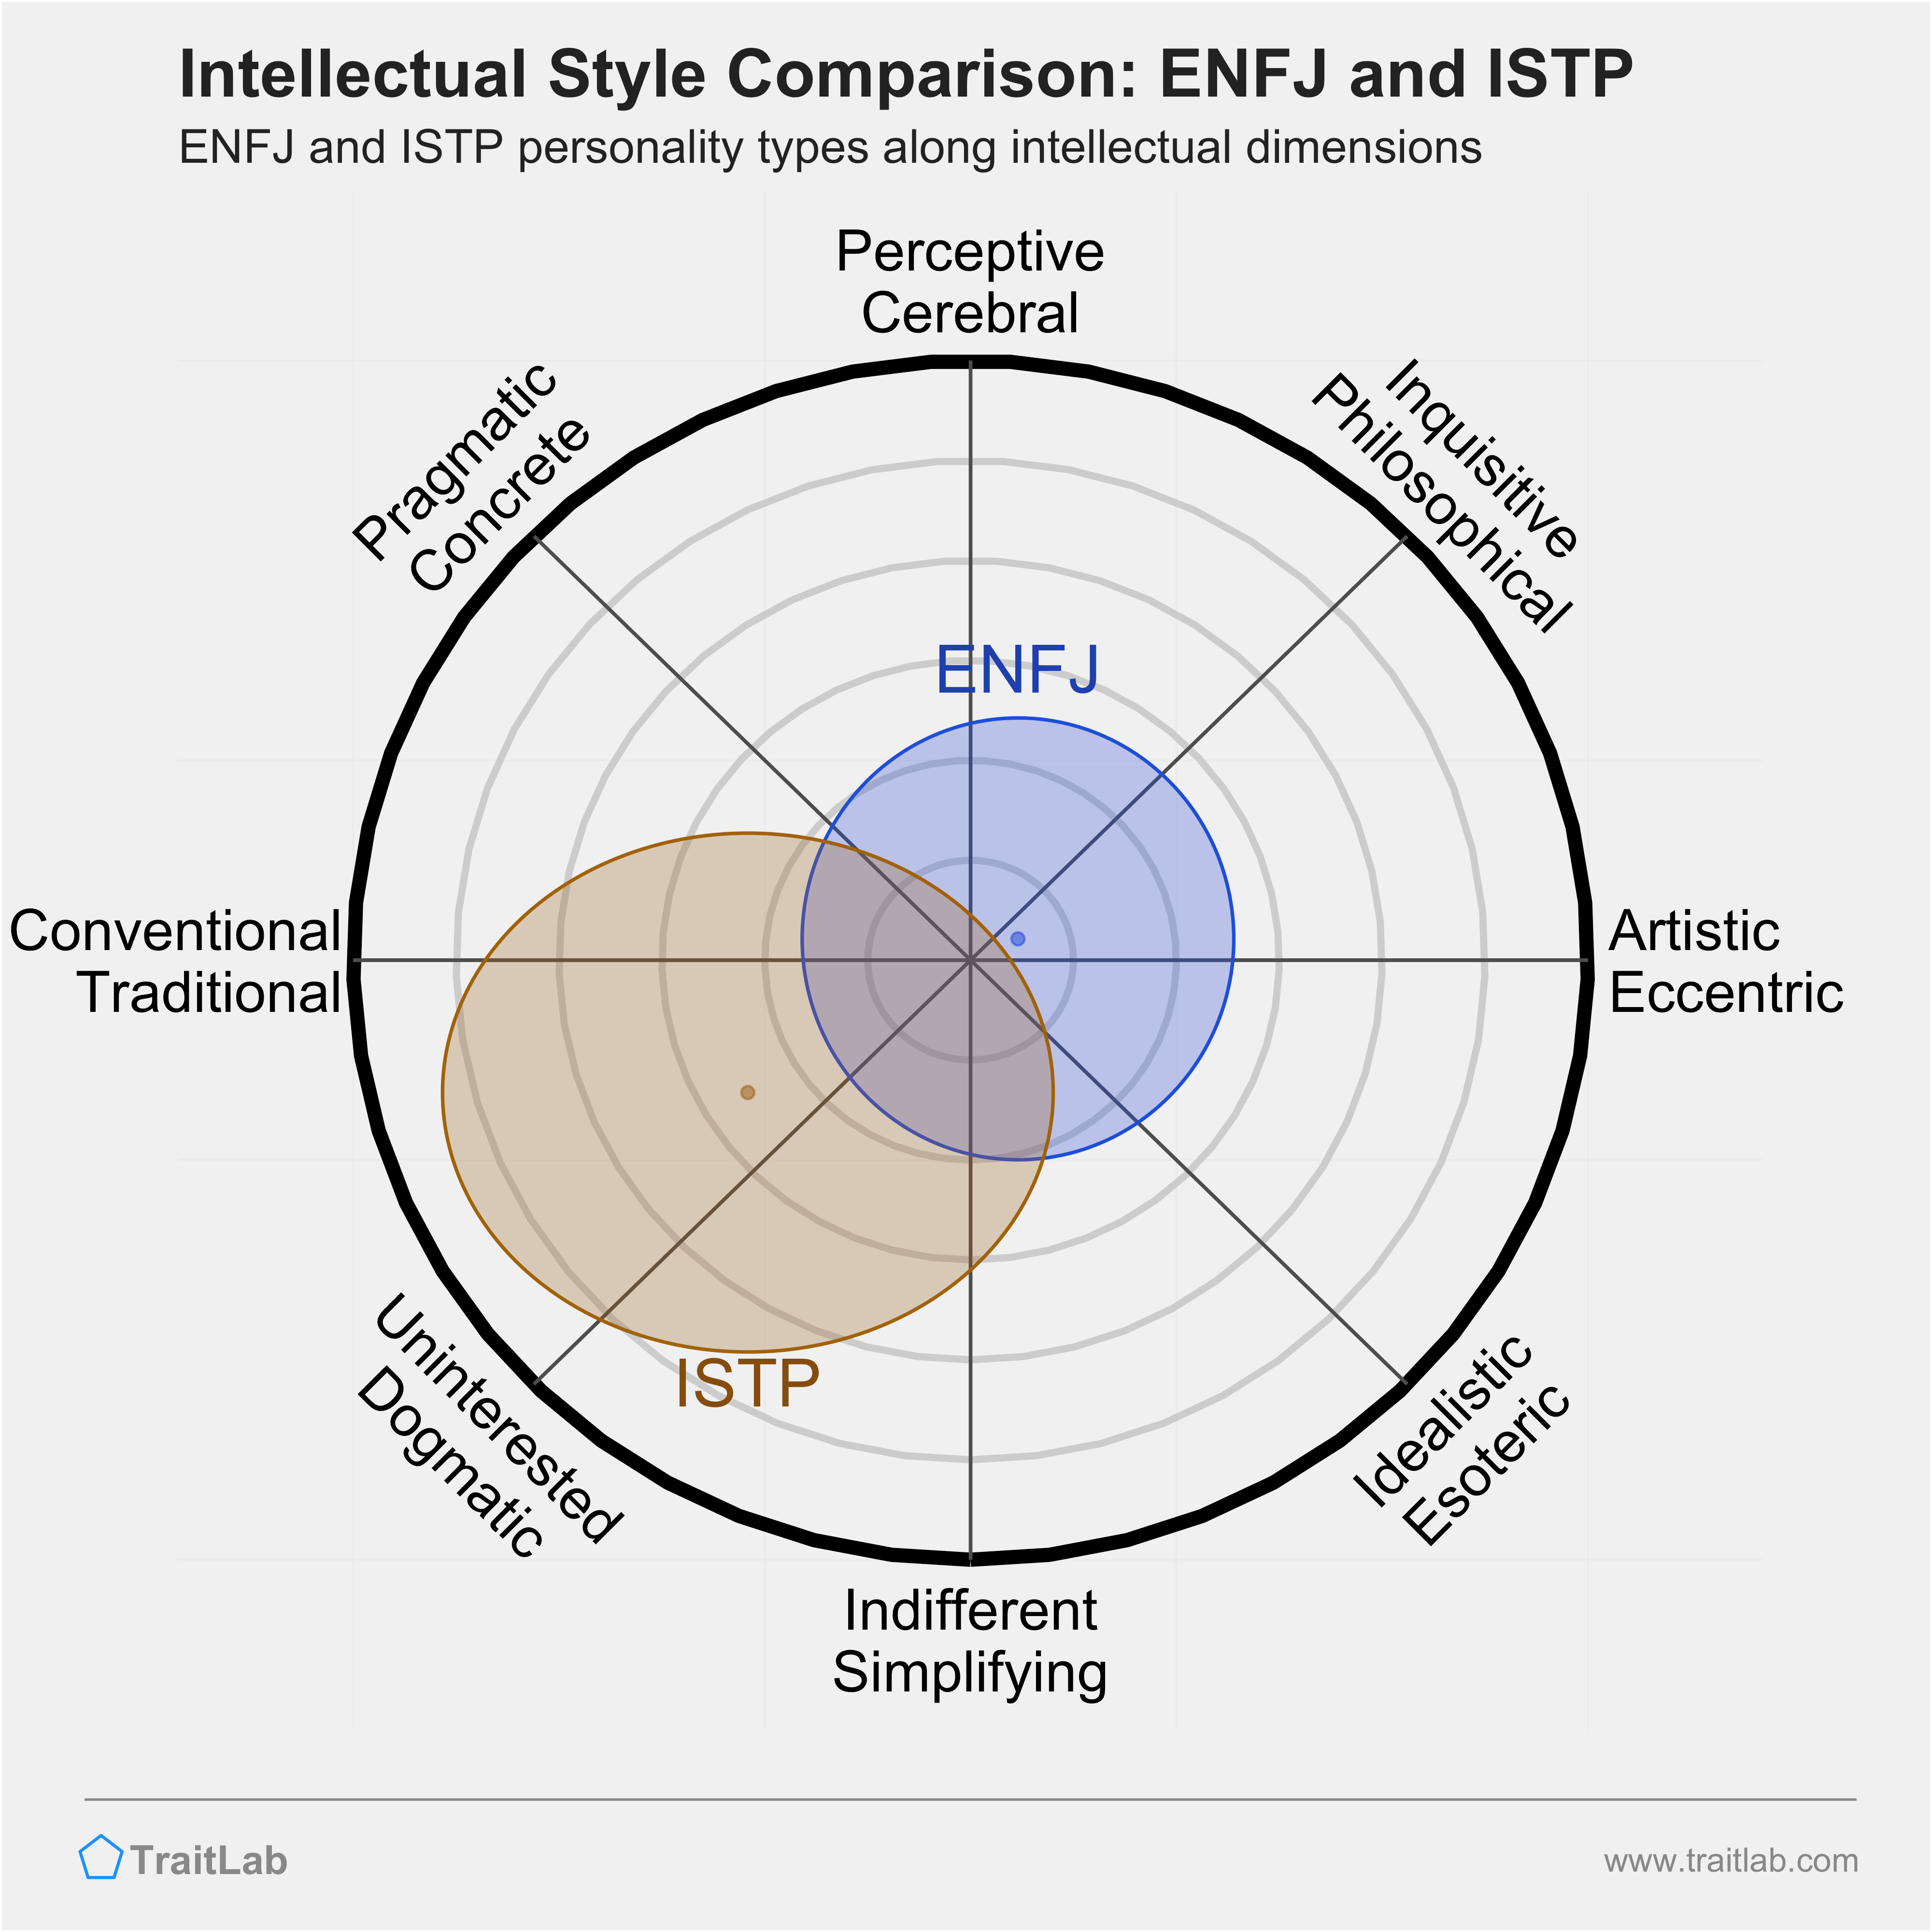 ENFJ and ISTP comparison across intellectual dimensions